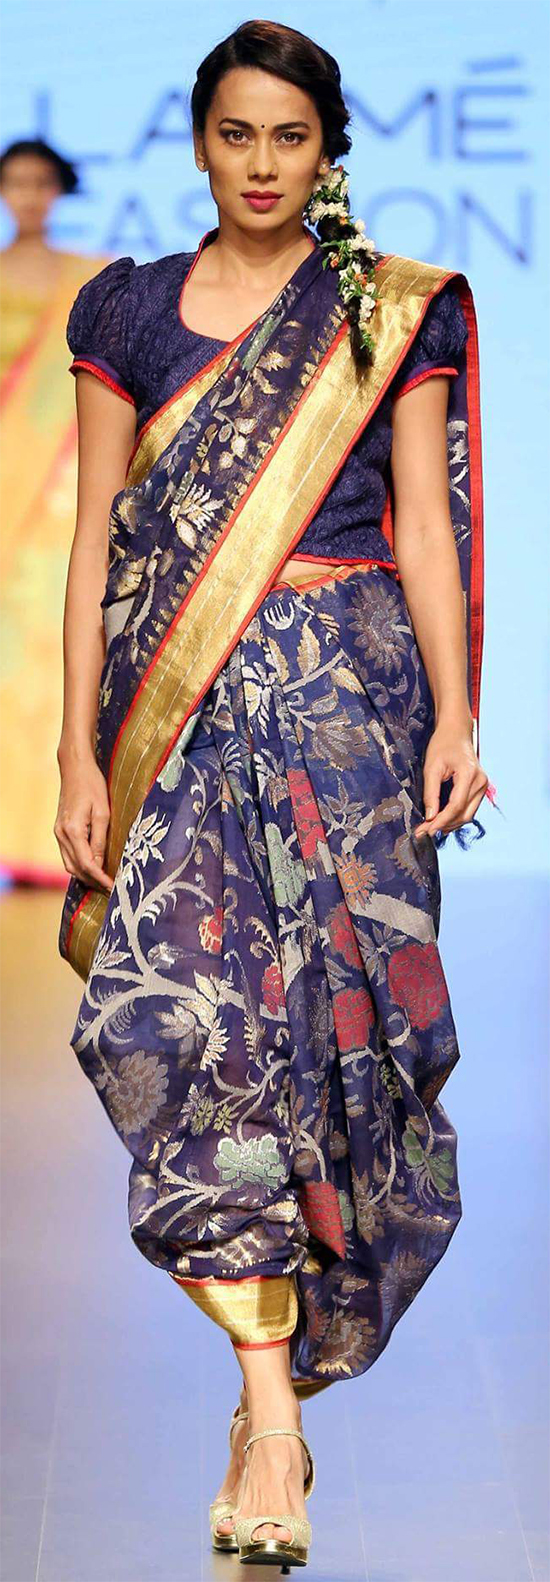 Classy Ornately Done Nauvari Sari